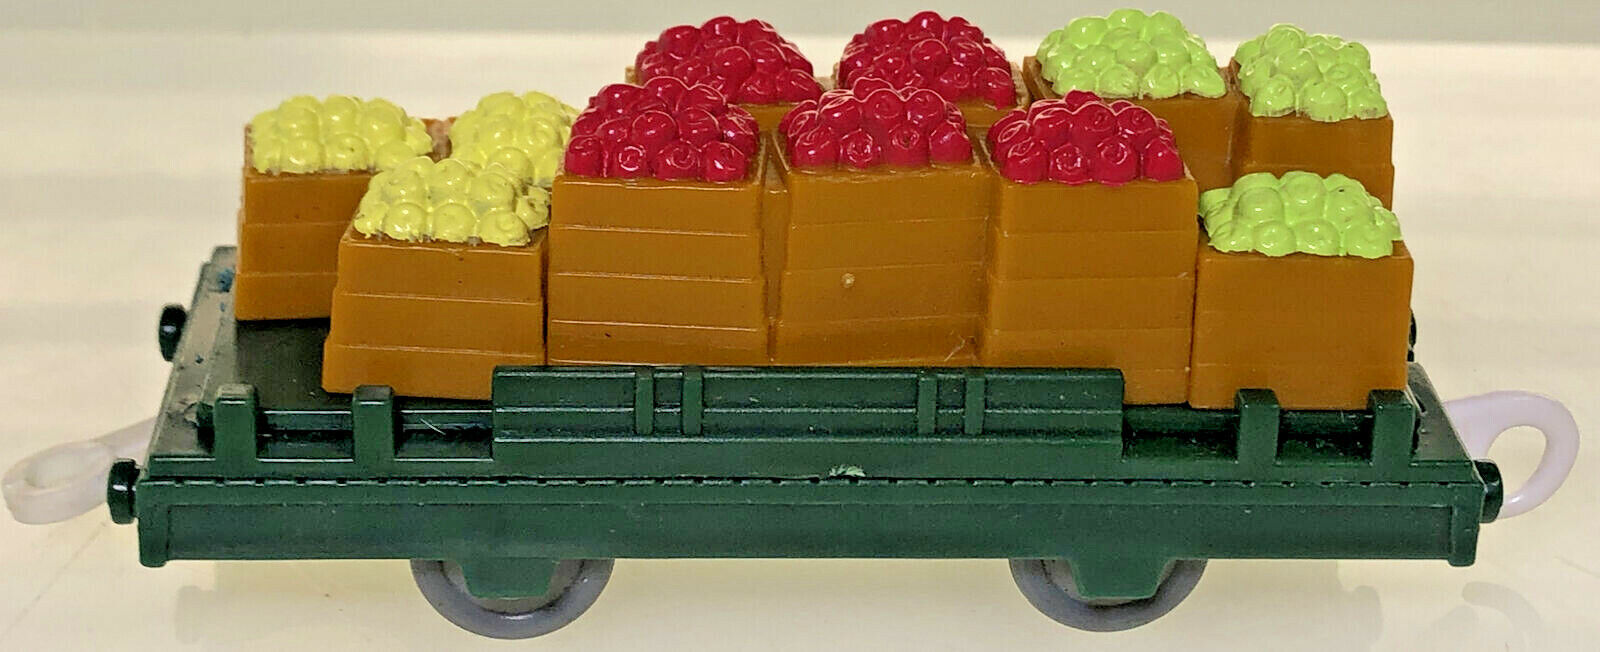 Thomas The Train Sodor Fruit Car